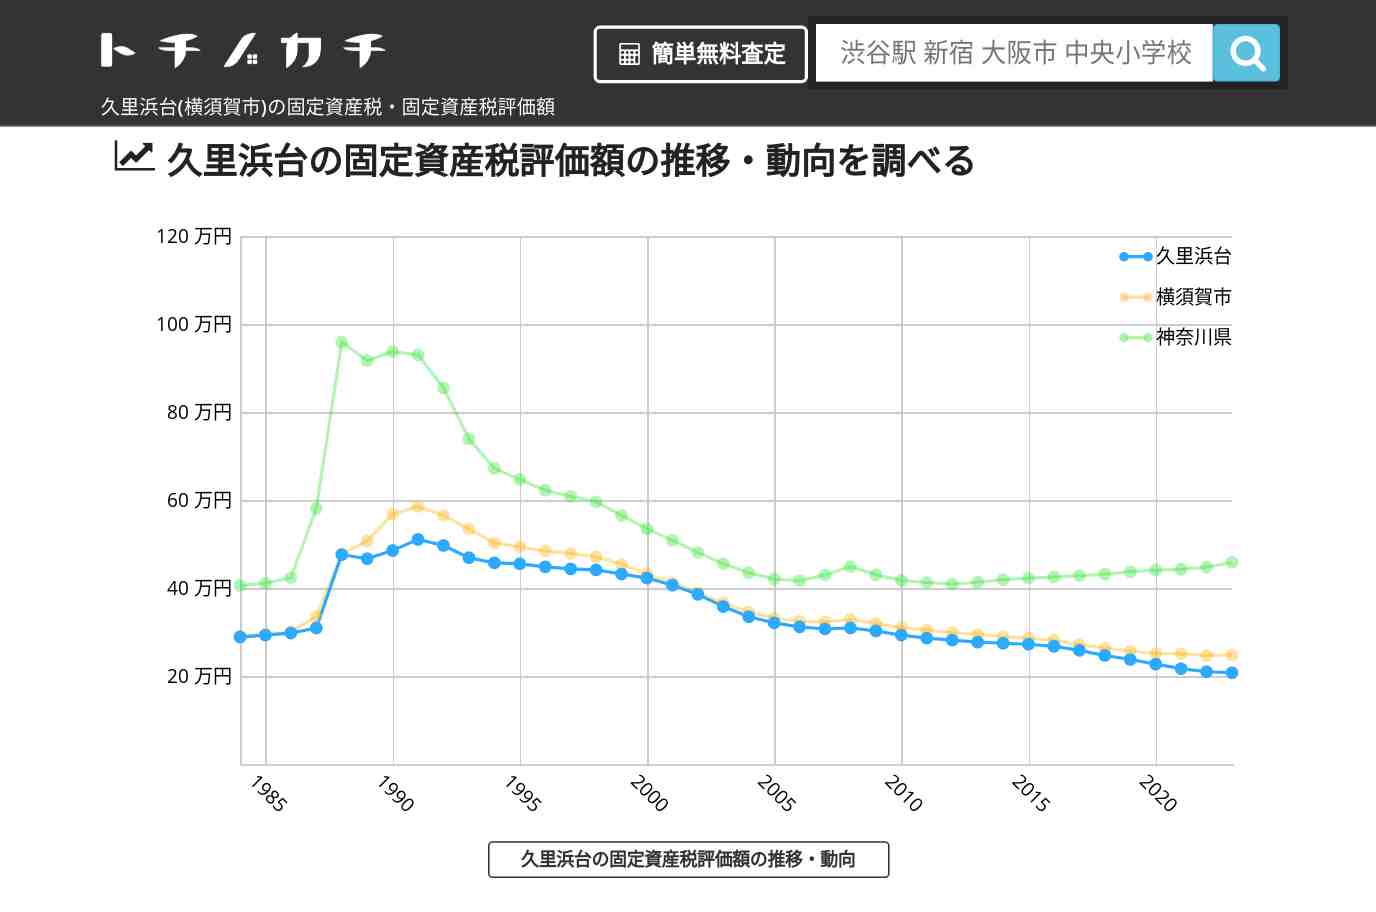 久里浜台(横須賀市)の固定資産税・固定資産税評価額 | トチノカチ